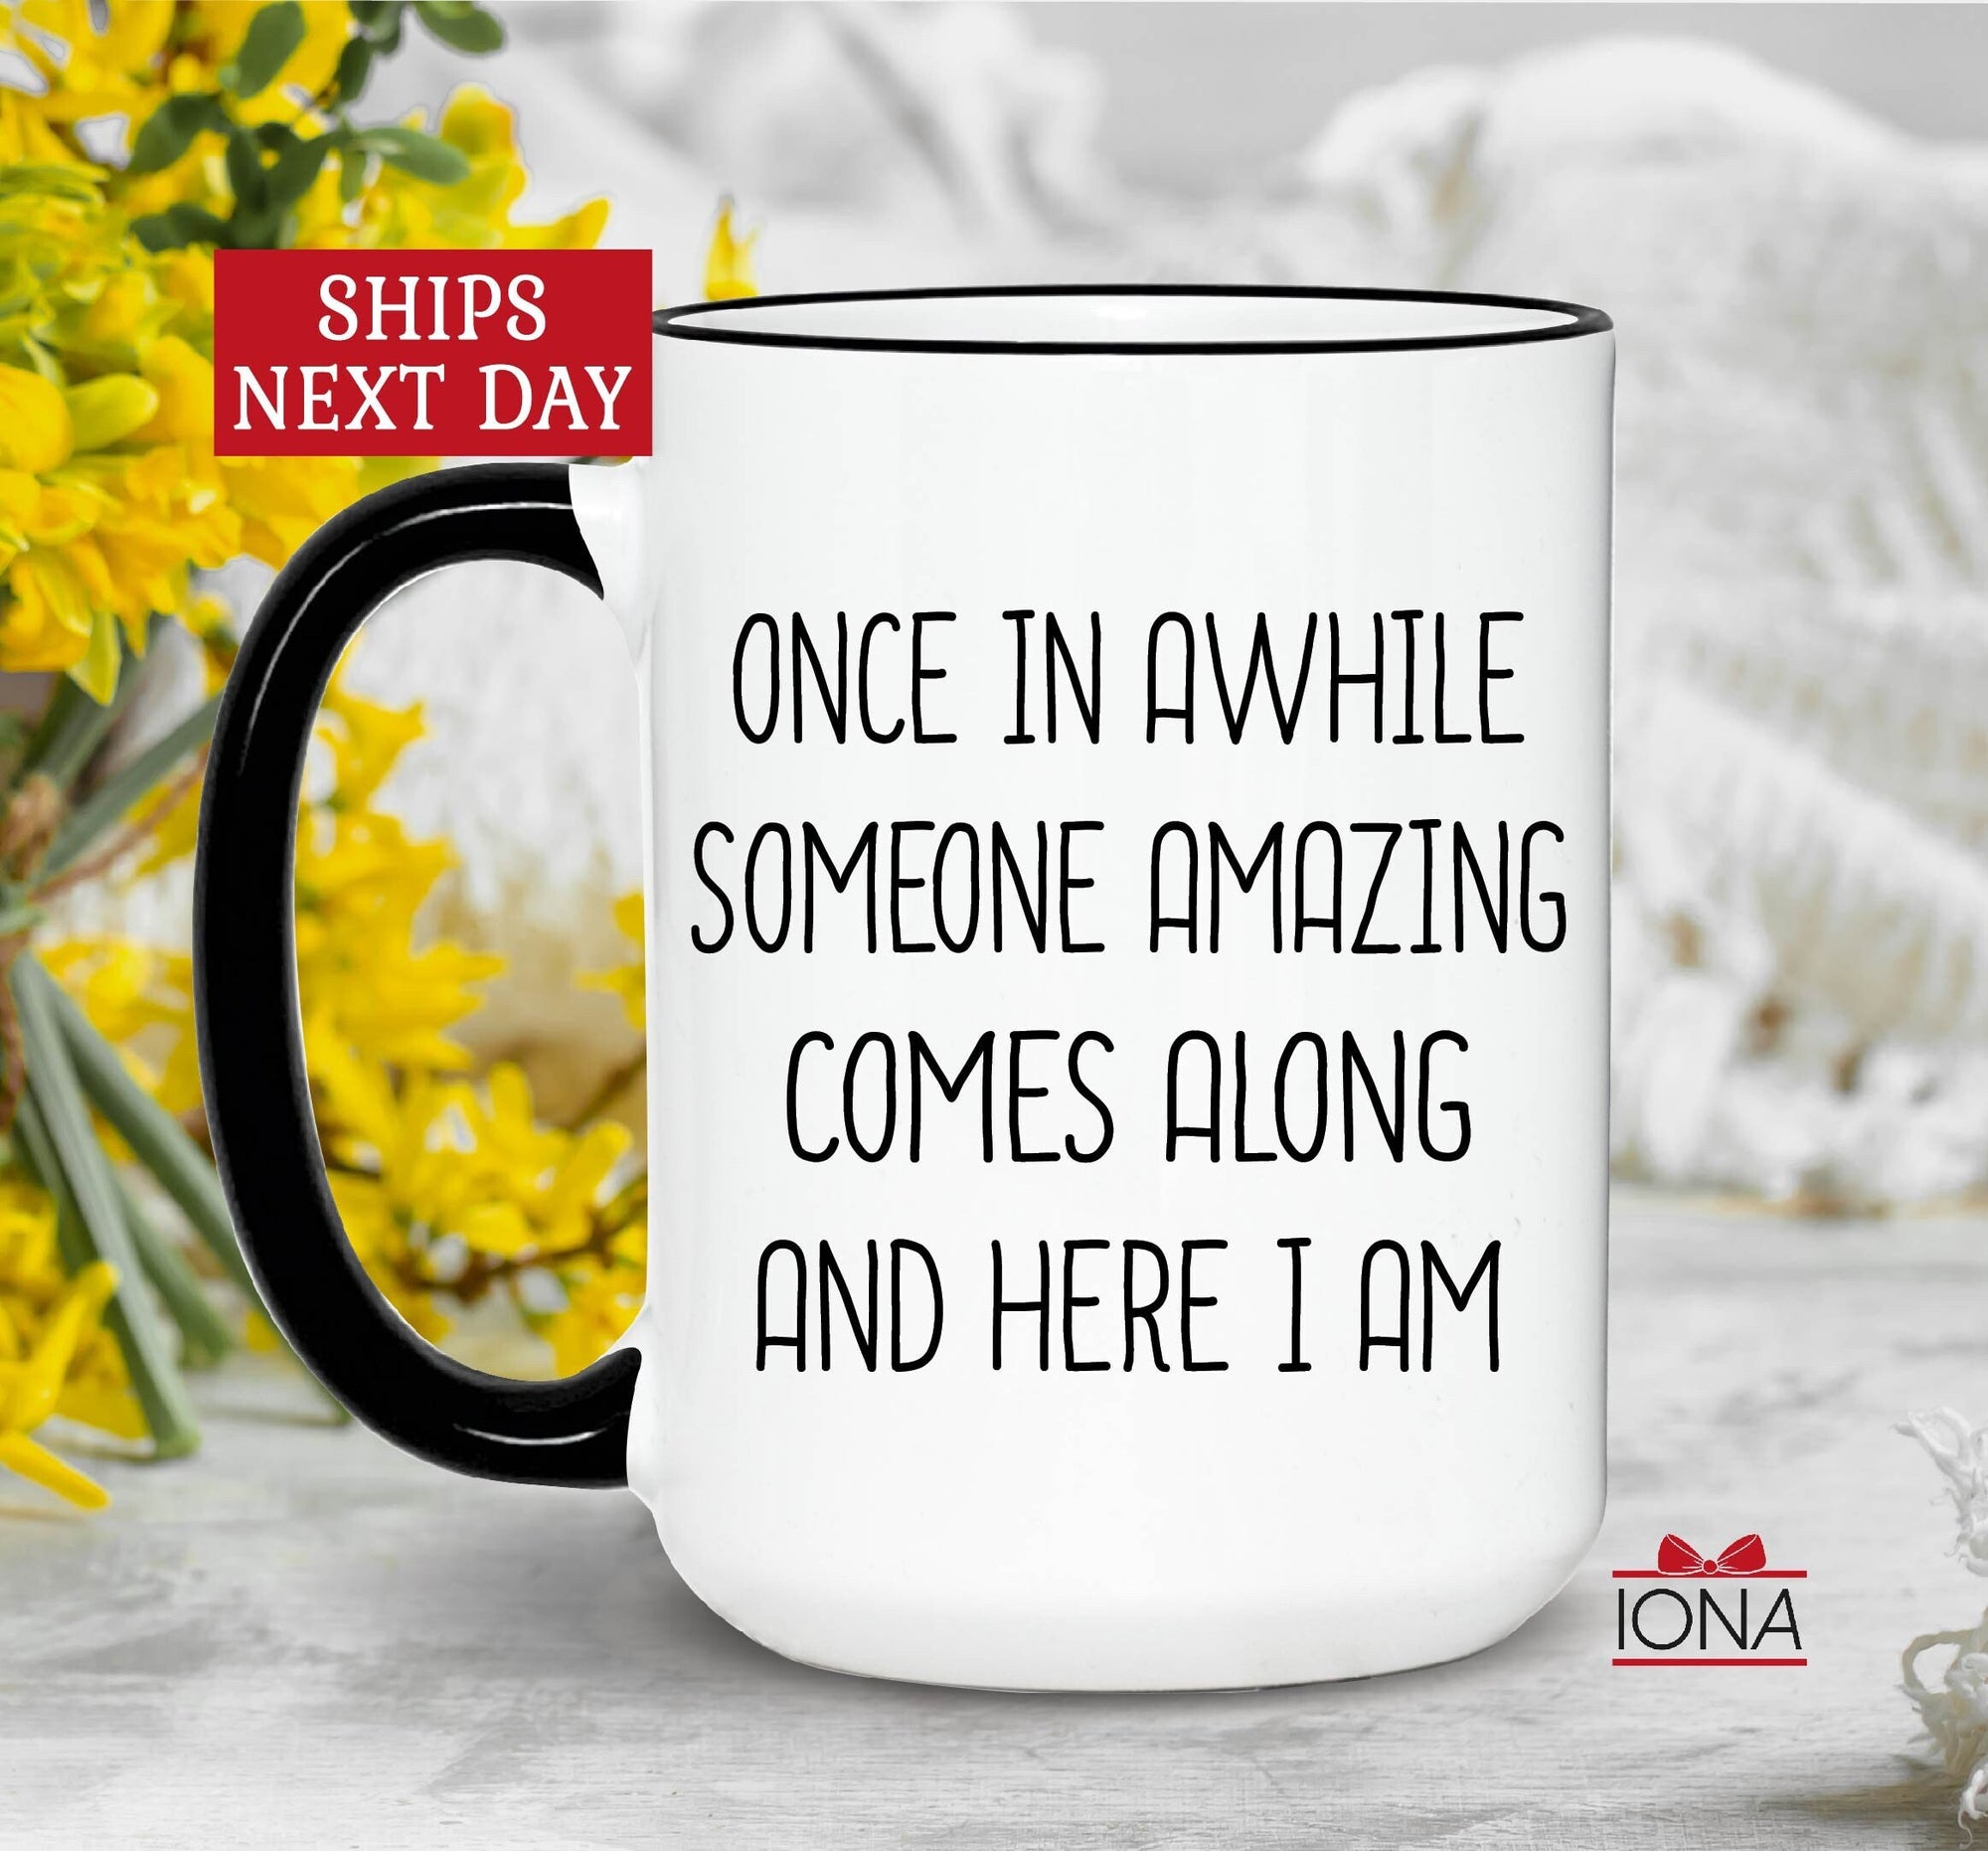 Sarcastic Coffee Mug, Funny Morning Tea Cup, Mugs With Sayings, once in awhile, Gift For Her Him, Christmas Gift, Birthday Funny Present